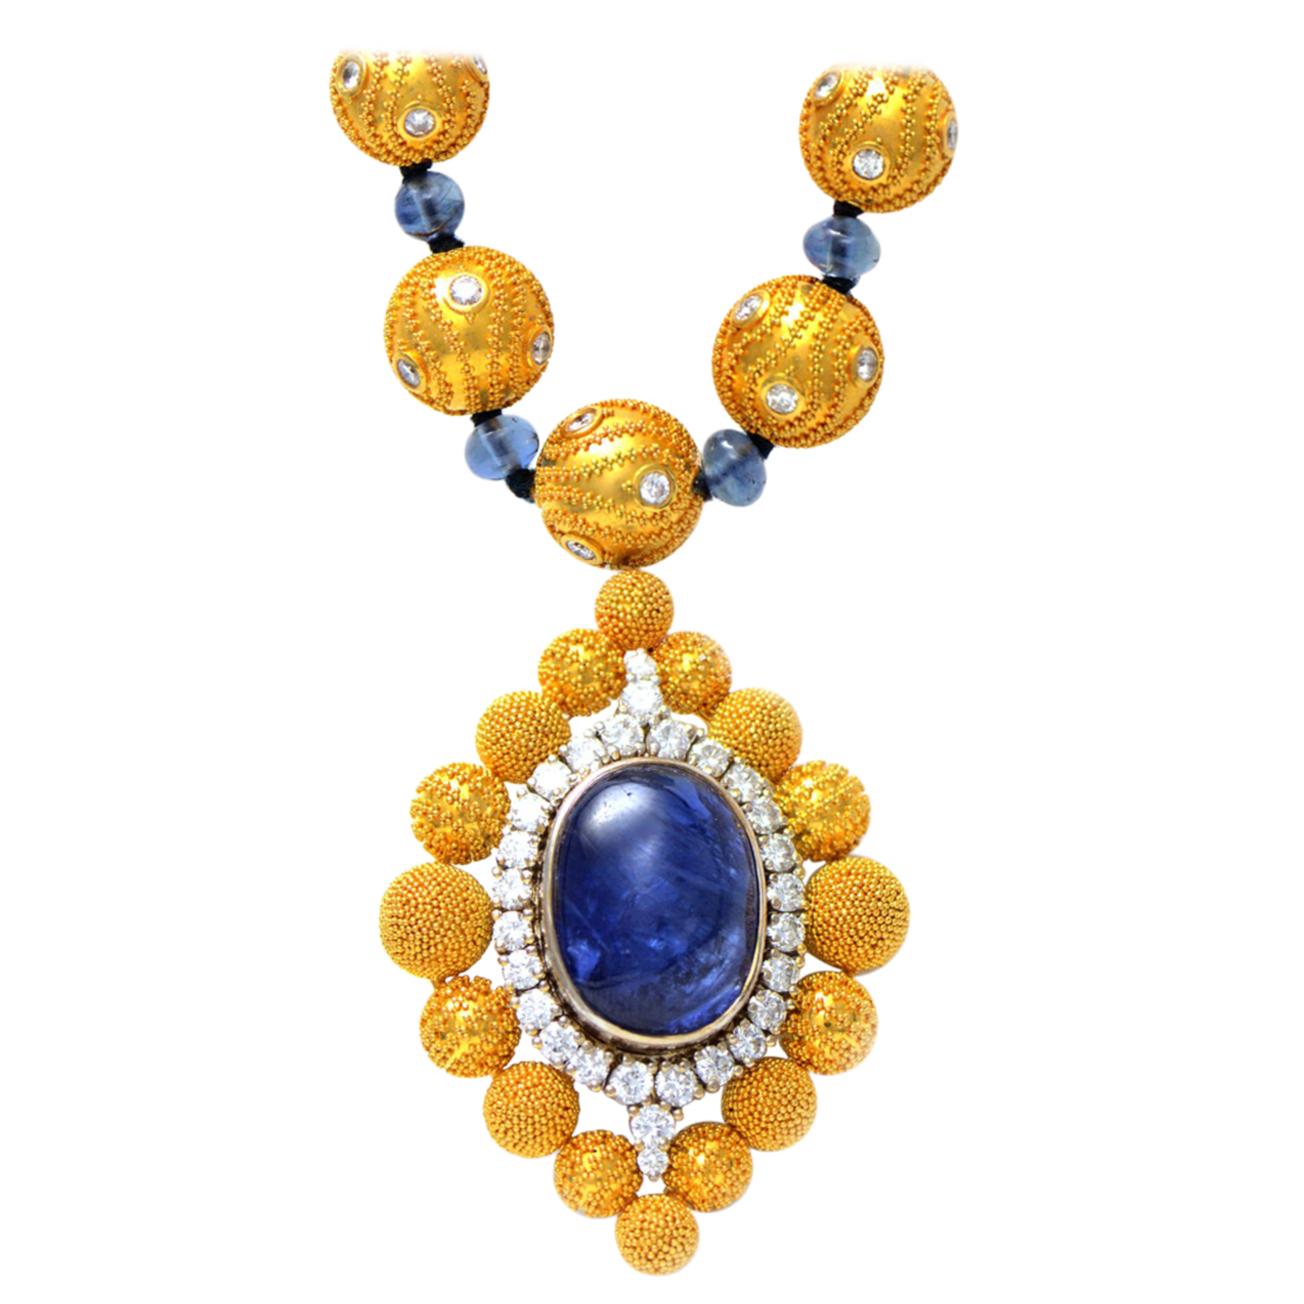 Solid 18 Karat Gold, Genuine Diamond and Sapphire Beaded Pendant Necklace!